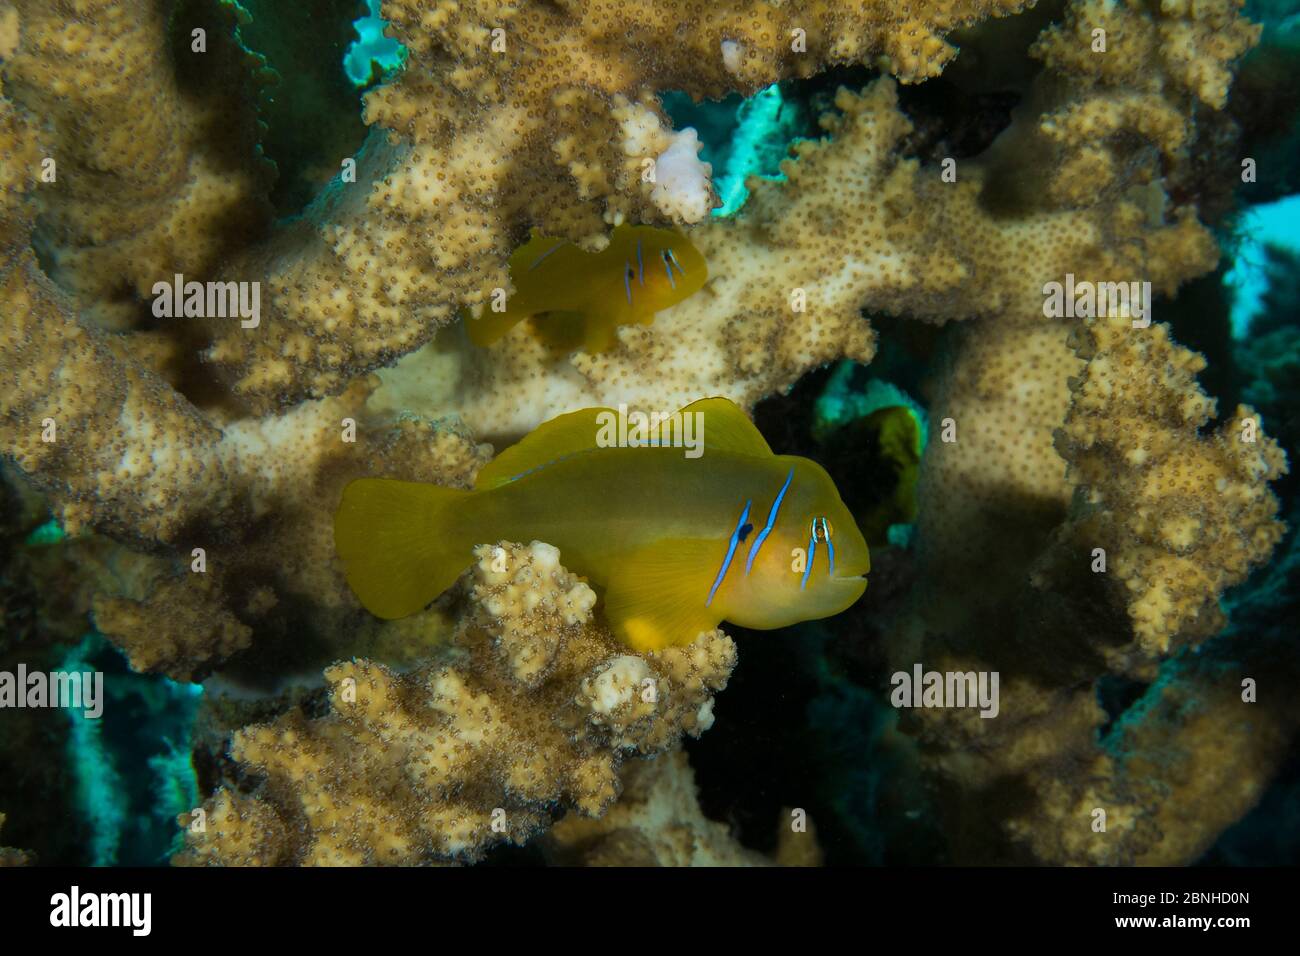 Lemon goby (Gobiodon citrinus) on staghorn coral (Acropora), Gubal Island, northern Red Sea. Stock Photo